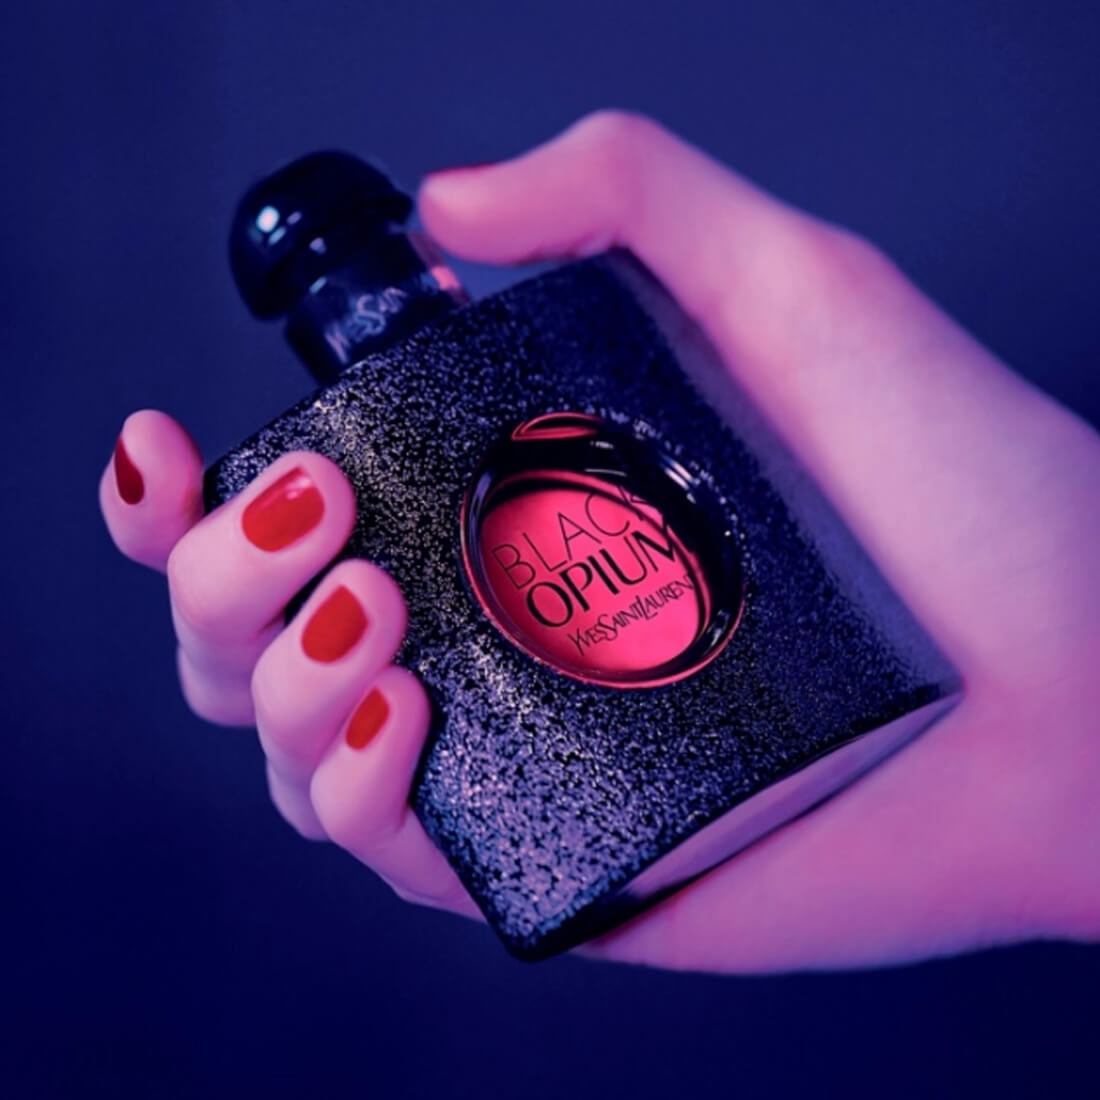 Yves Saint Laurent Black Opium Eau De Perfume For Women 90ml